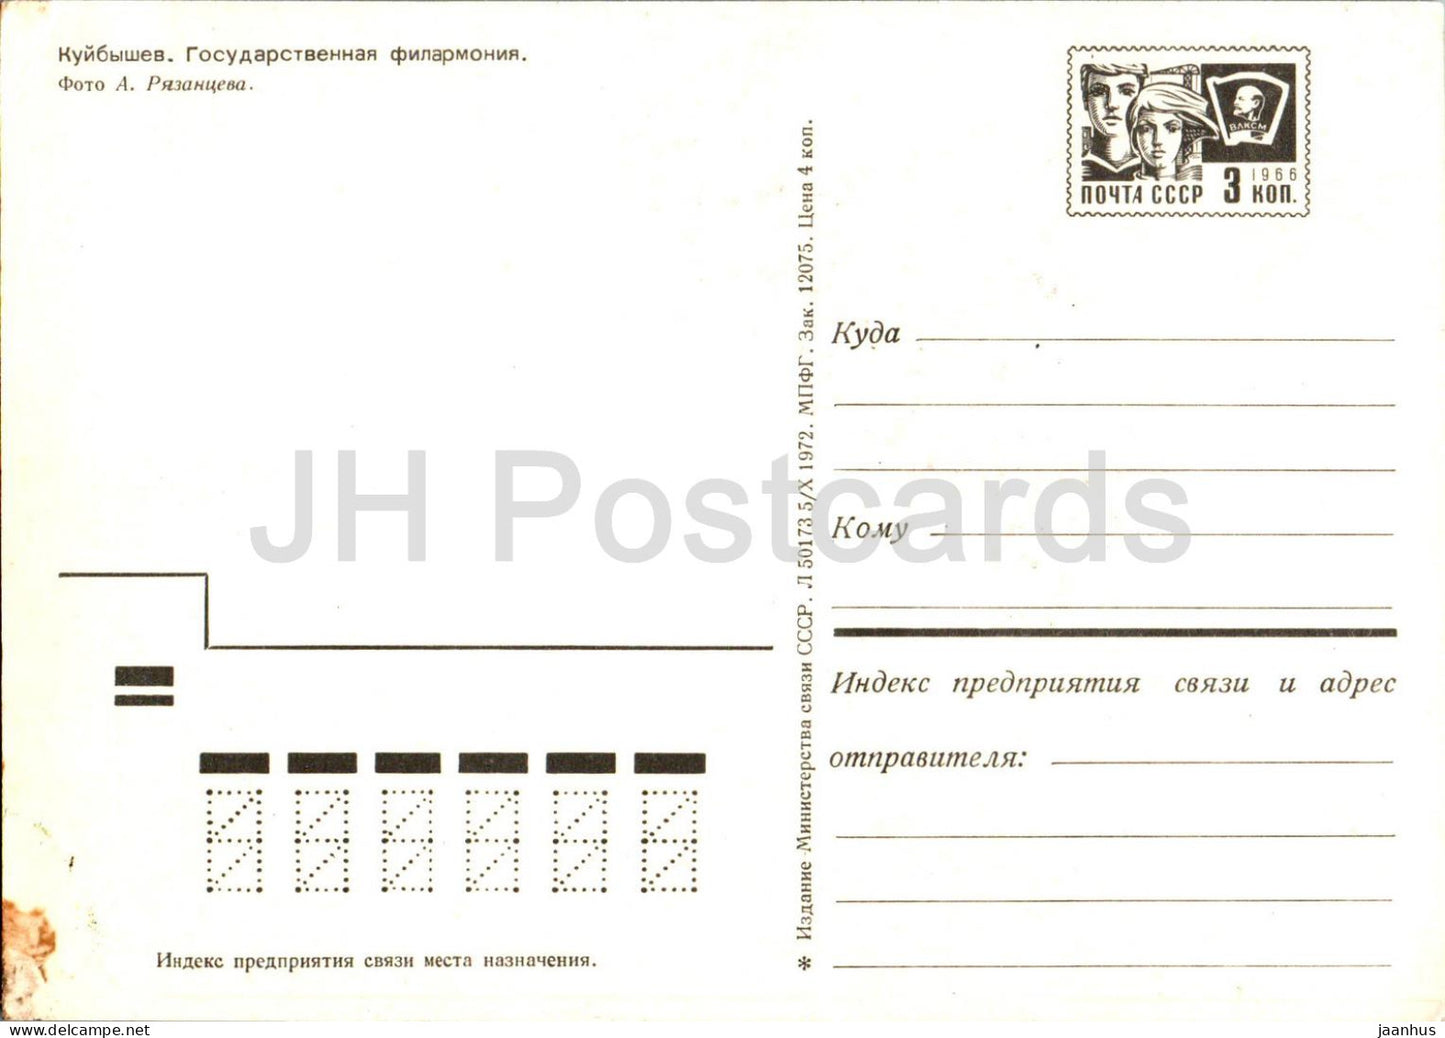 Kuybyshev - Samara - State Philharmonic - tram - entier postal - 1972 - Russie URSS - inutilisé 